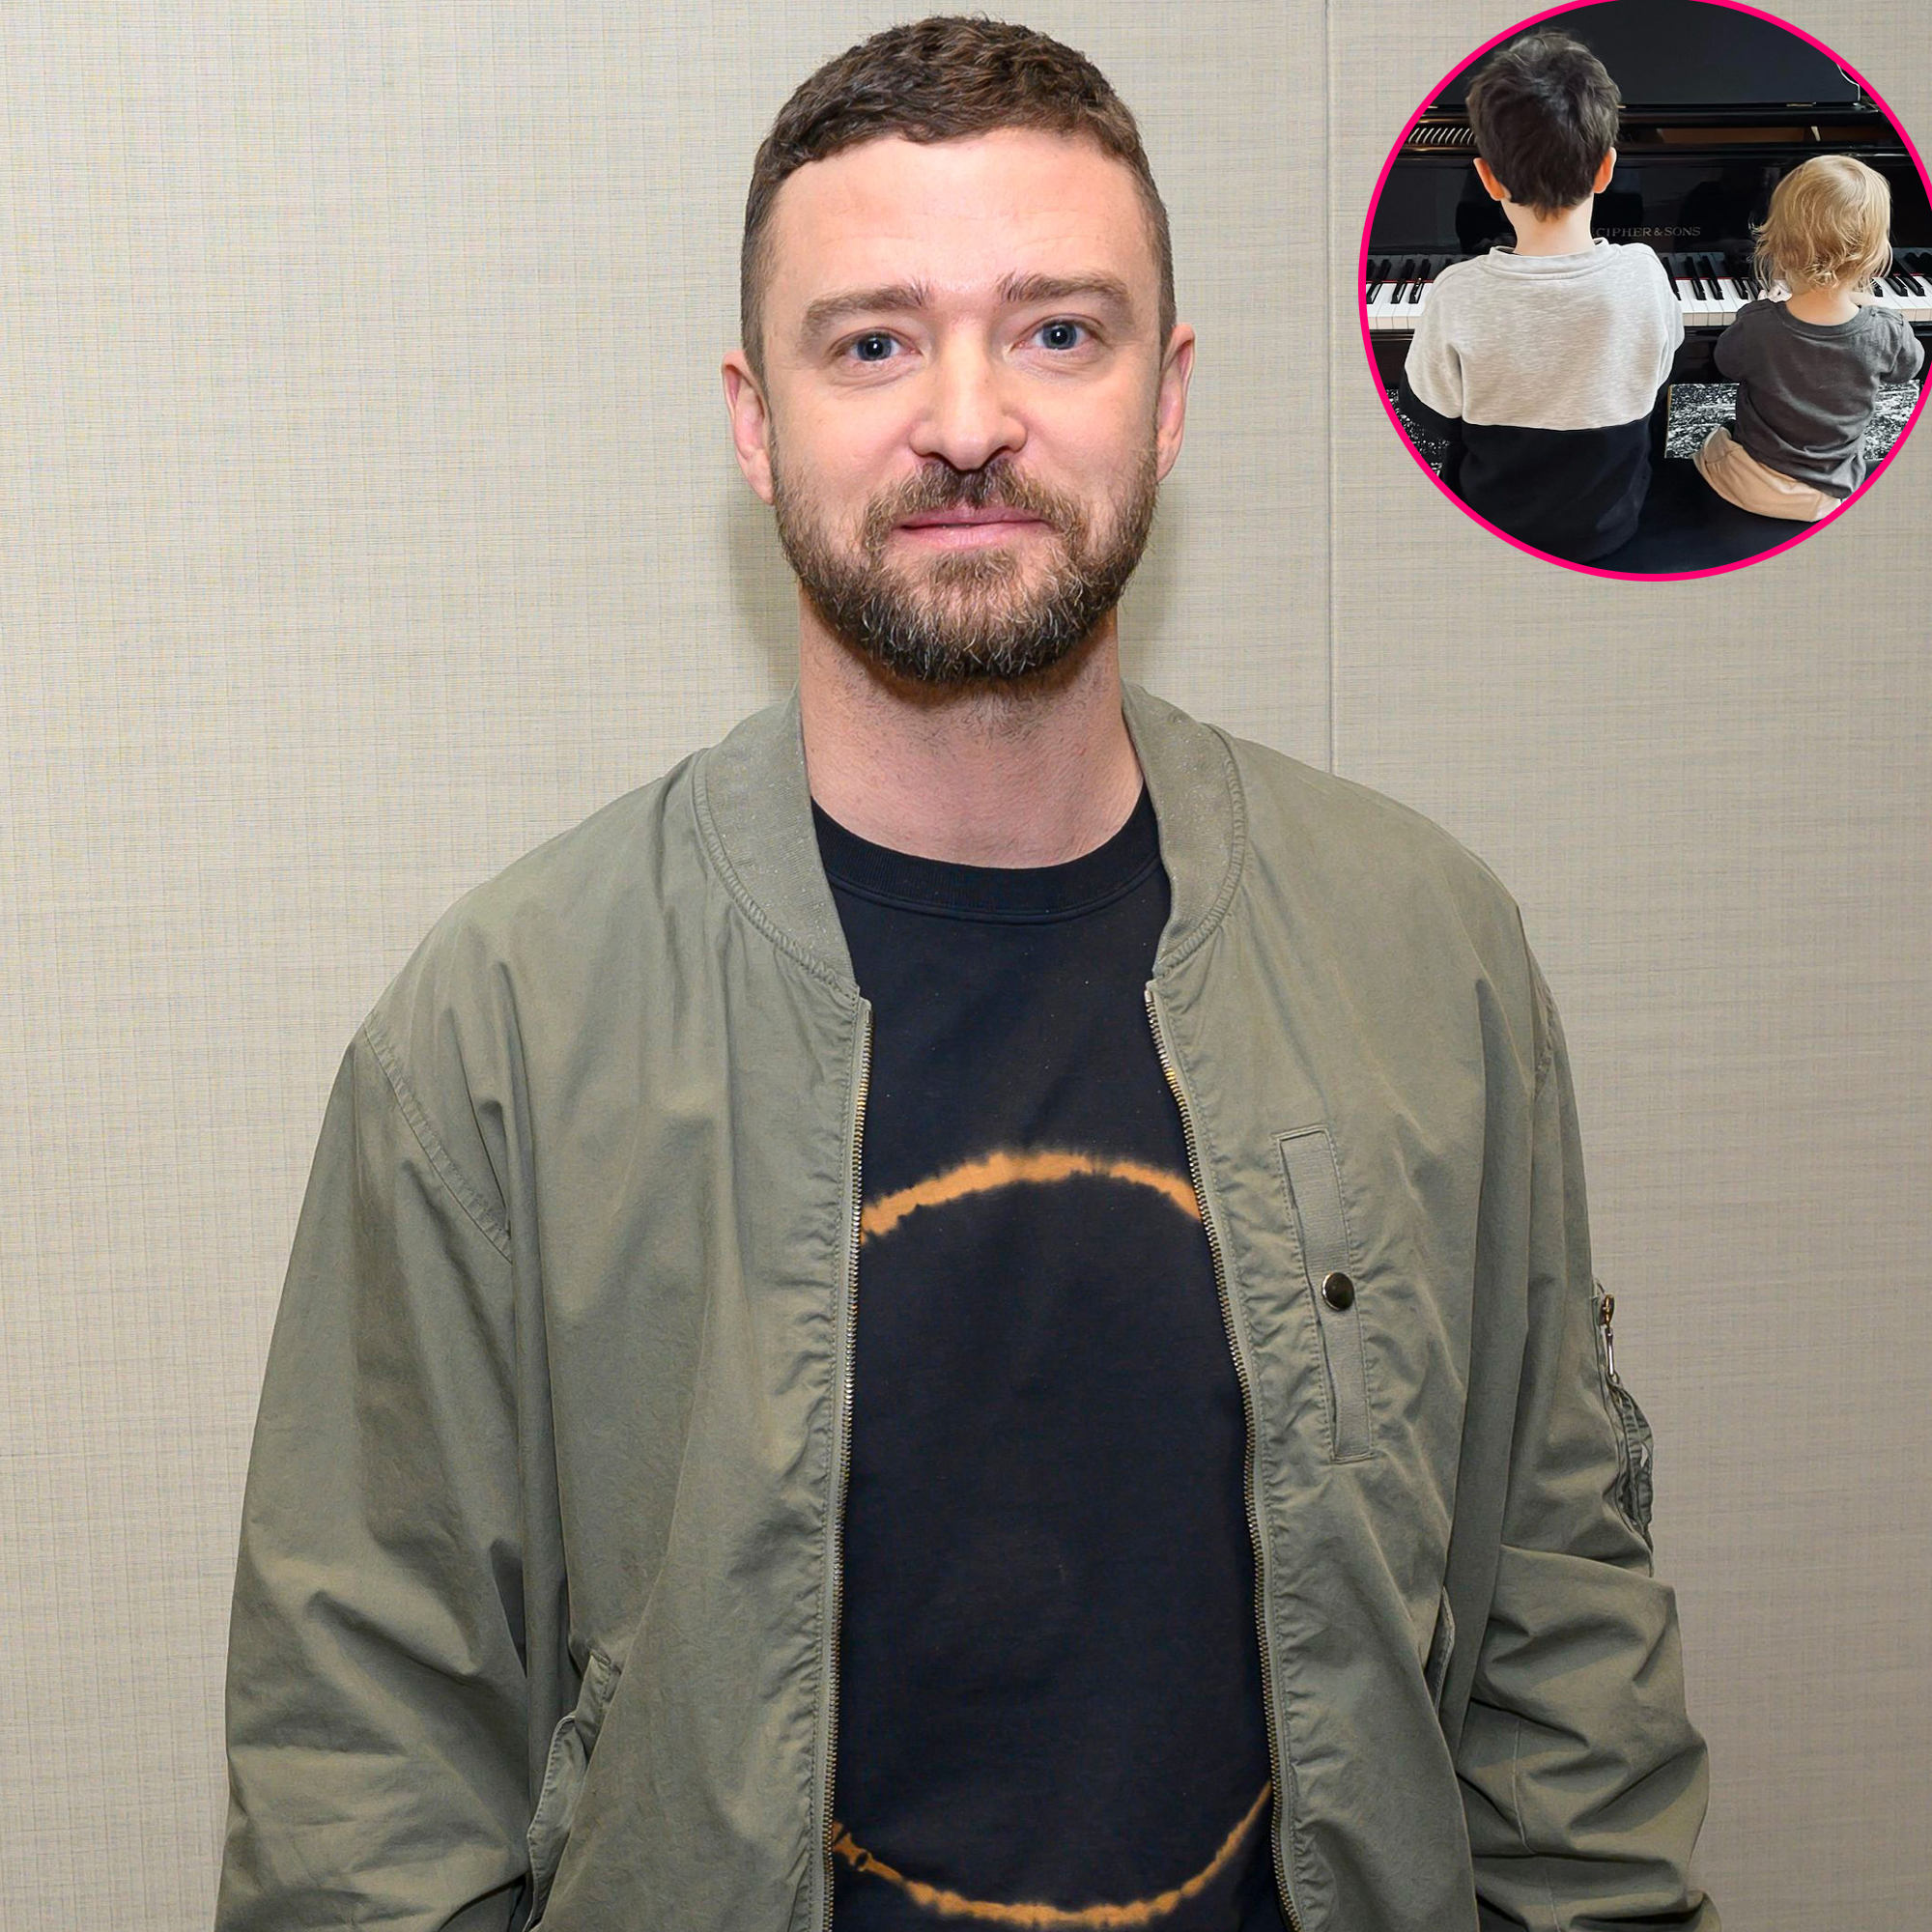 Justin Timberlake May Have Just Shared a Rare Photo of His Son